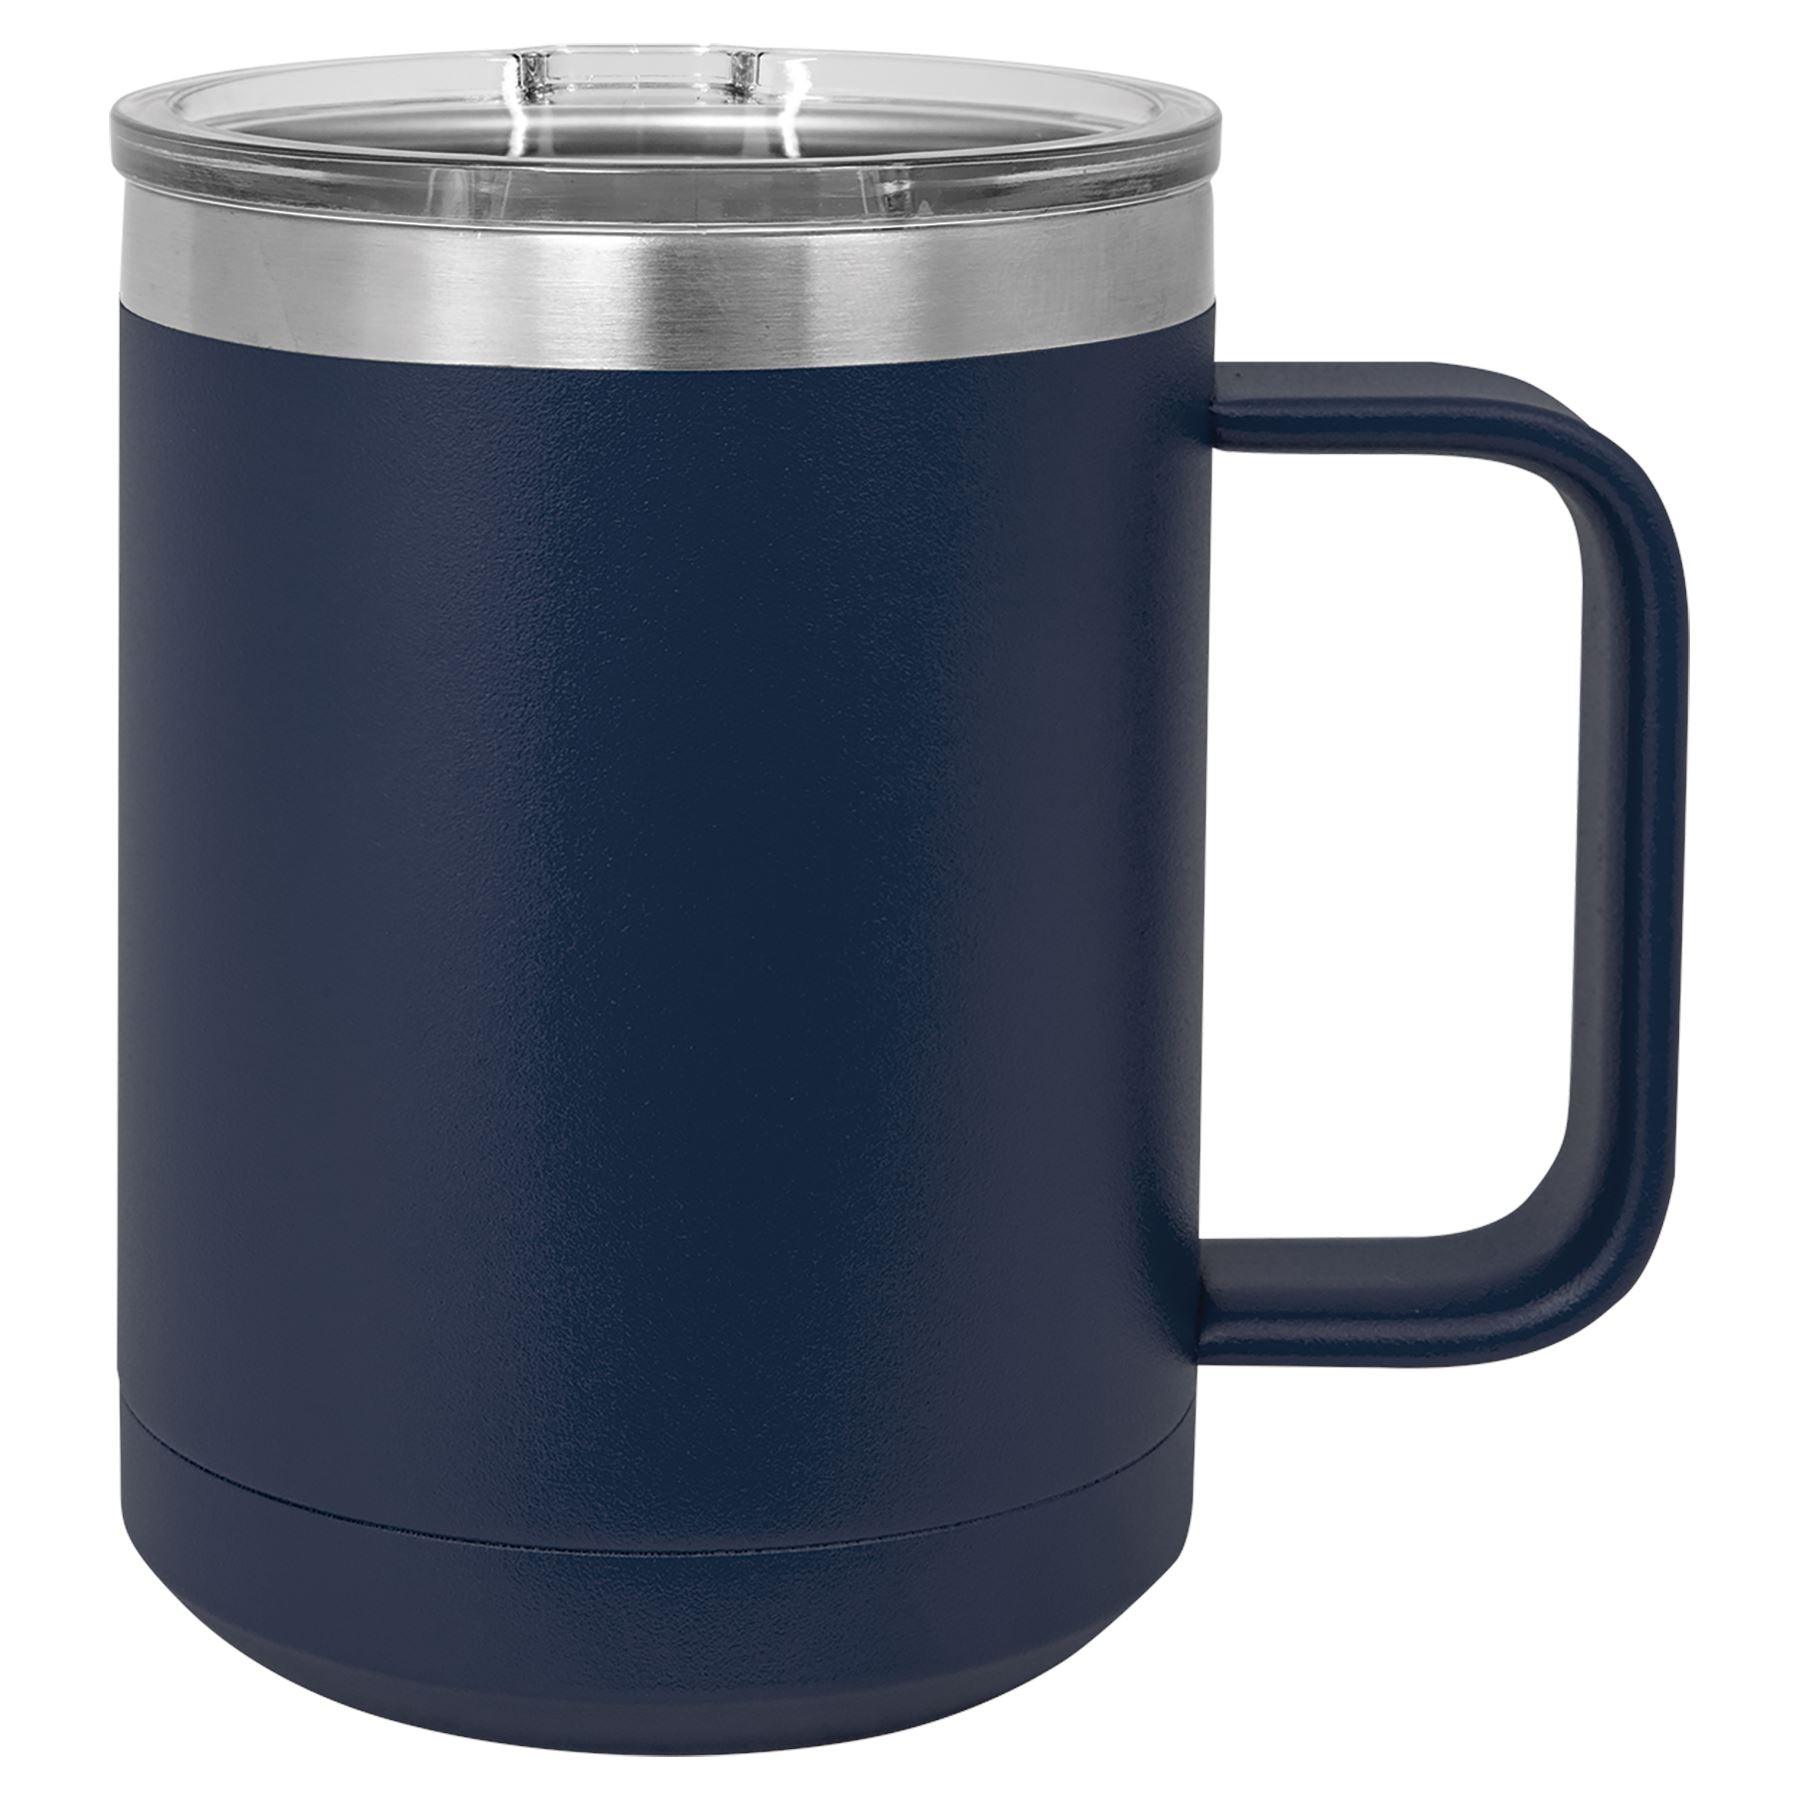 CAMP STYLE COFFEE CUPS 15 oz Coffee Mugs Hells Canyon Designs Black 